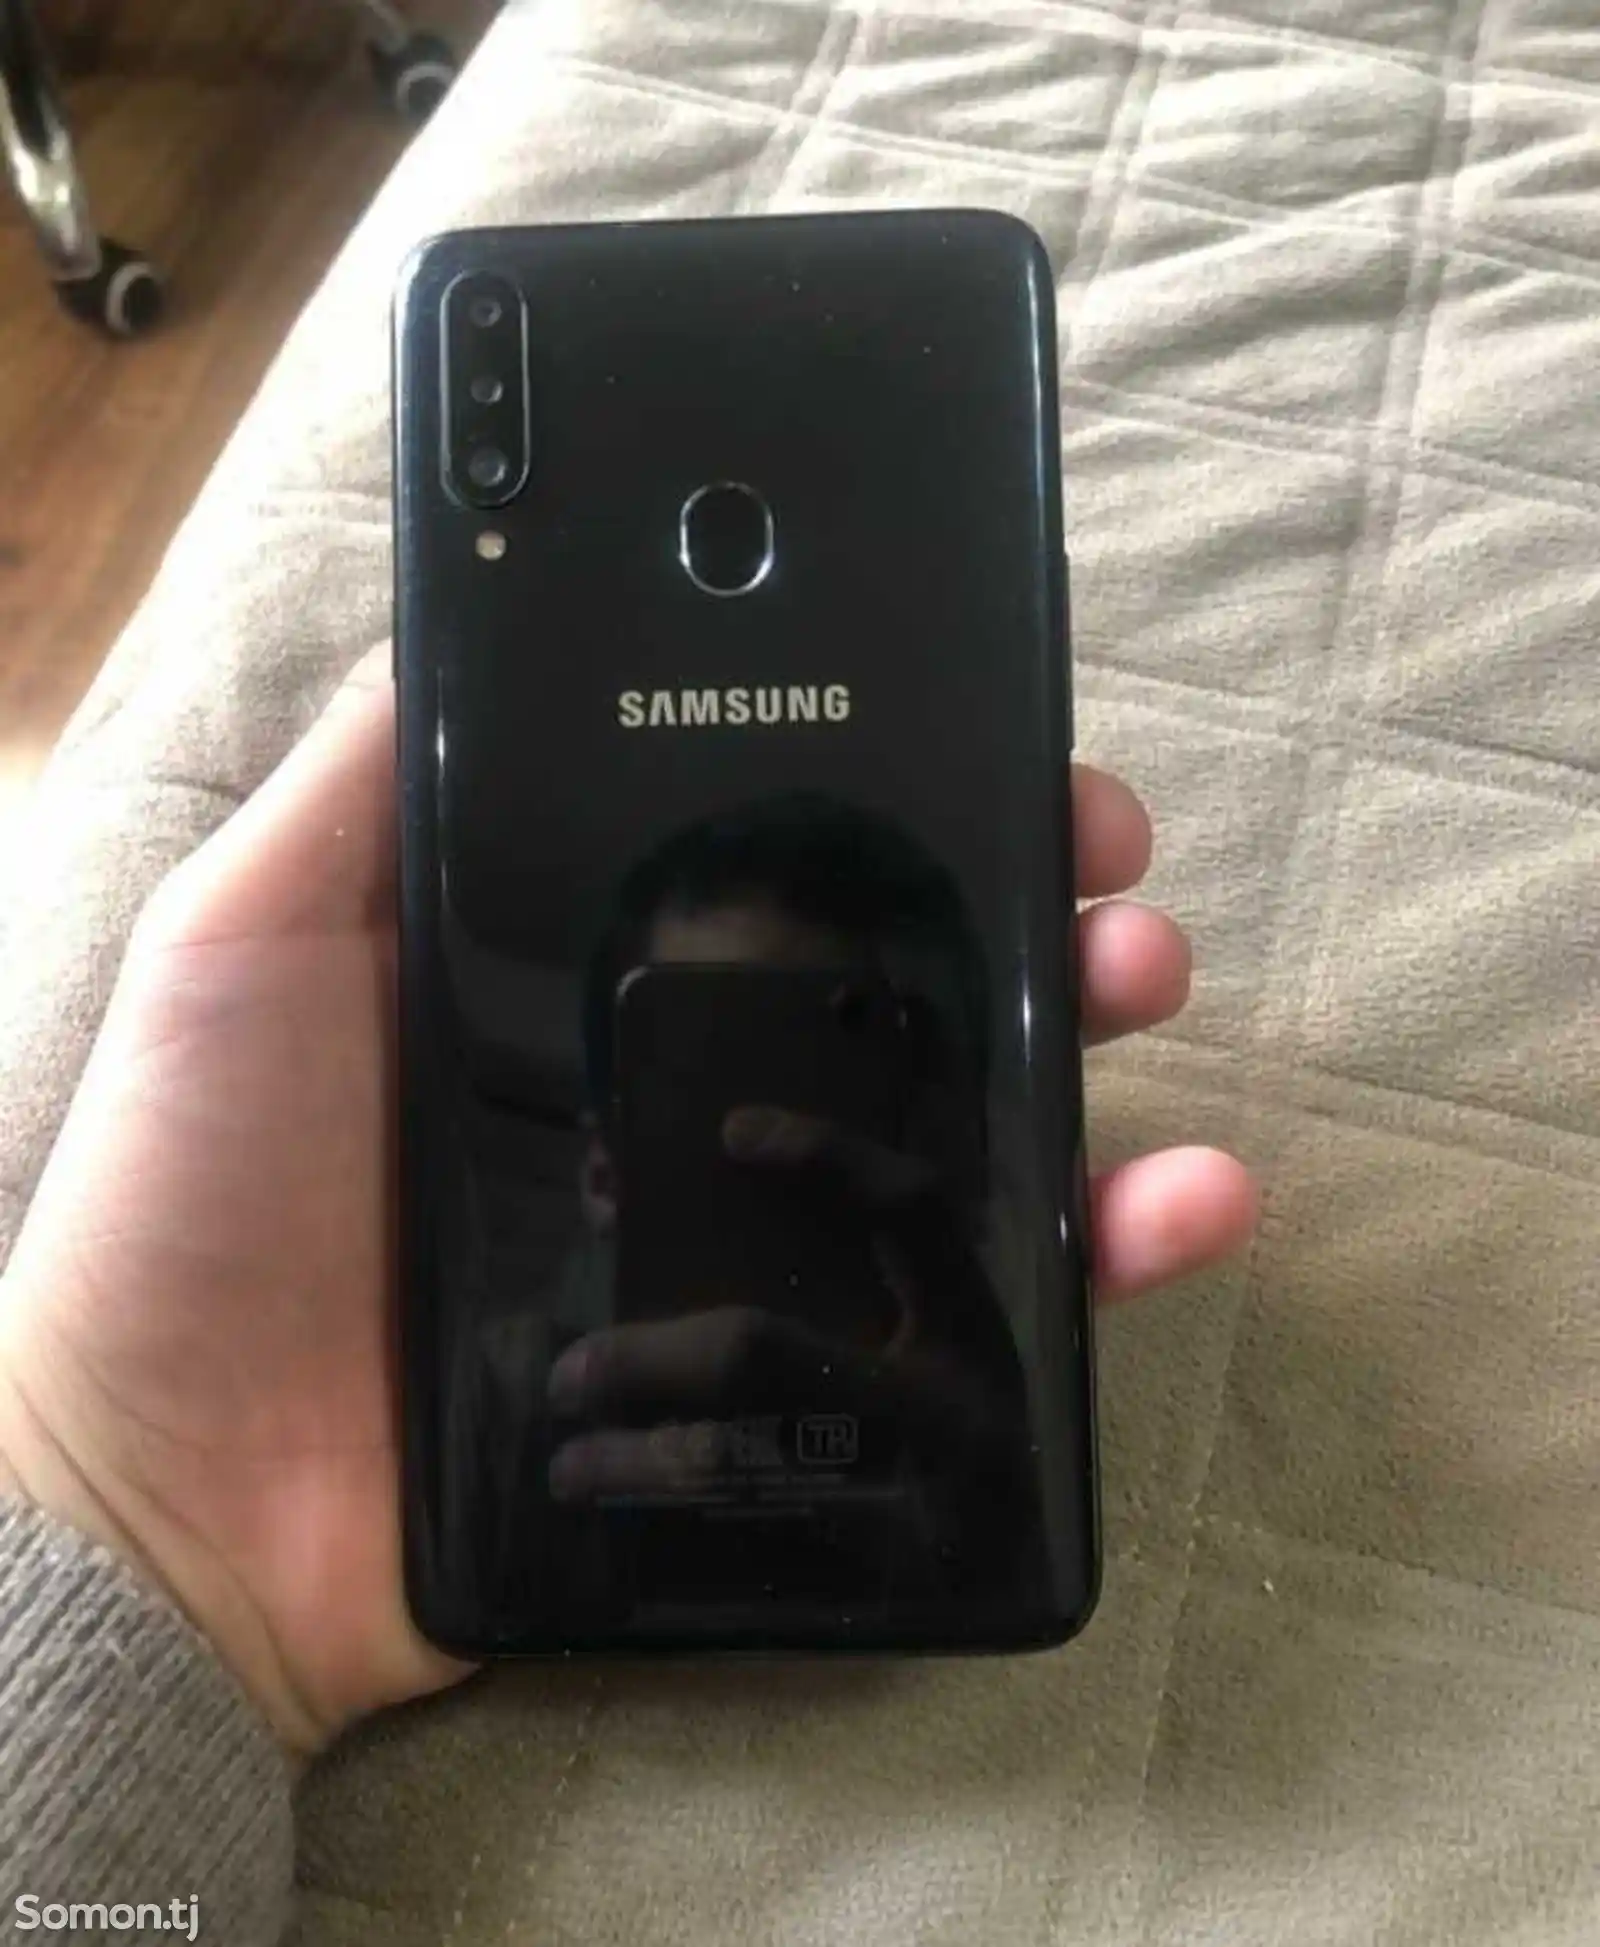 Samsung Galaxy A20s-2